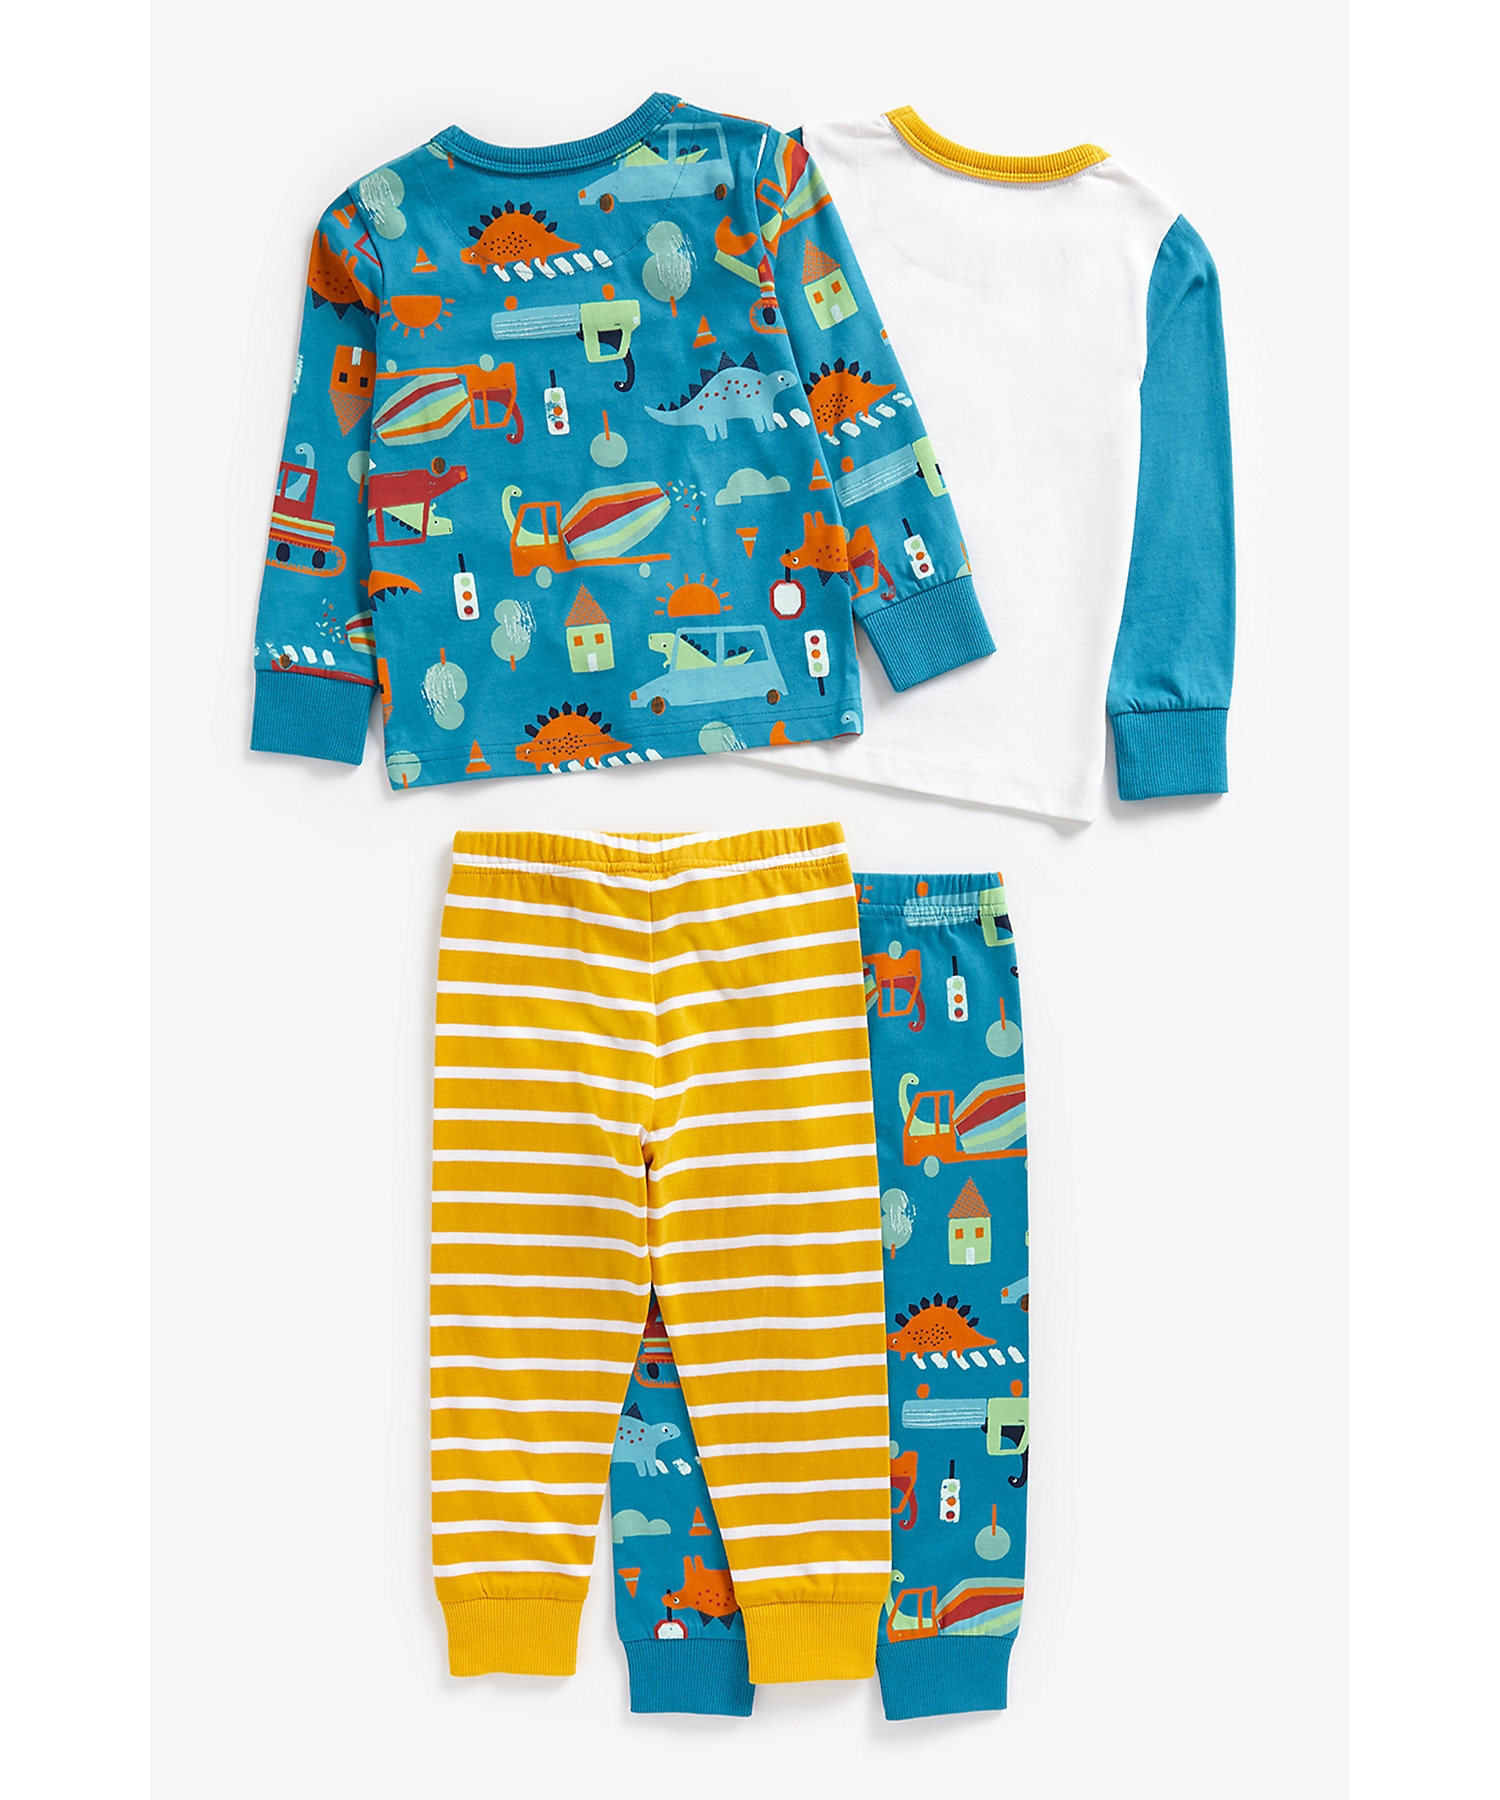 Boys Full Sleeves Pyjamas Set -Pack of 2-Multicolor